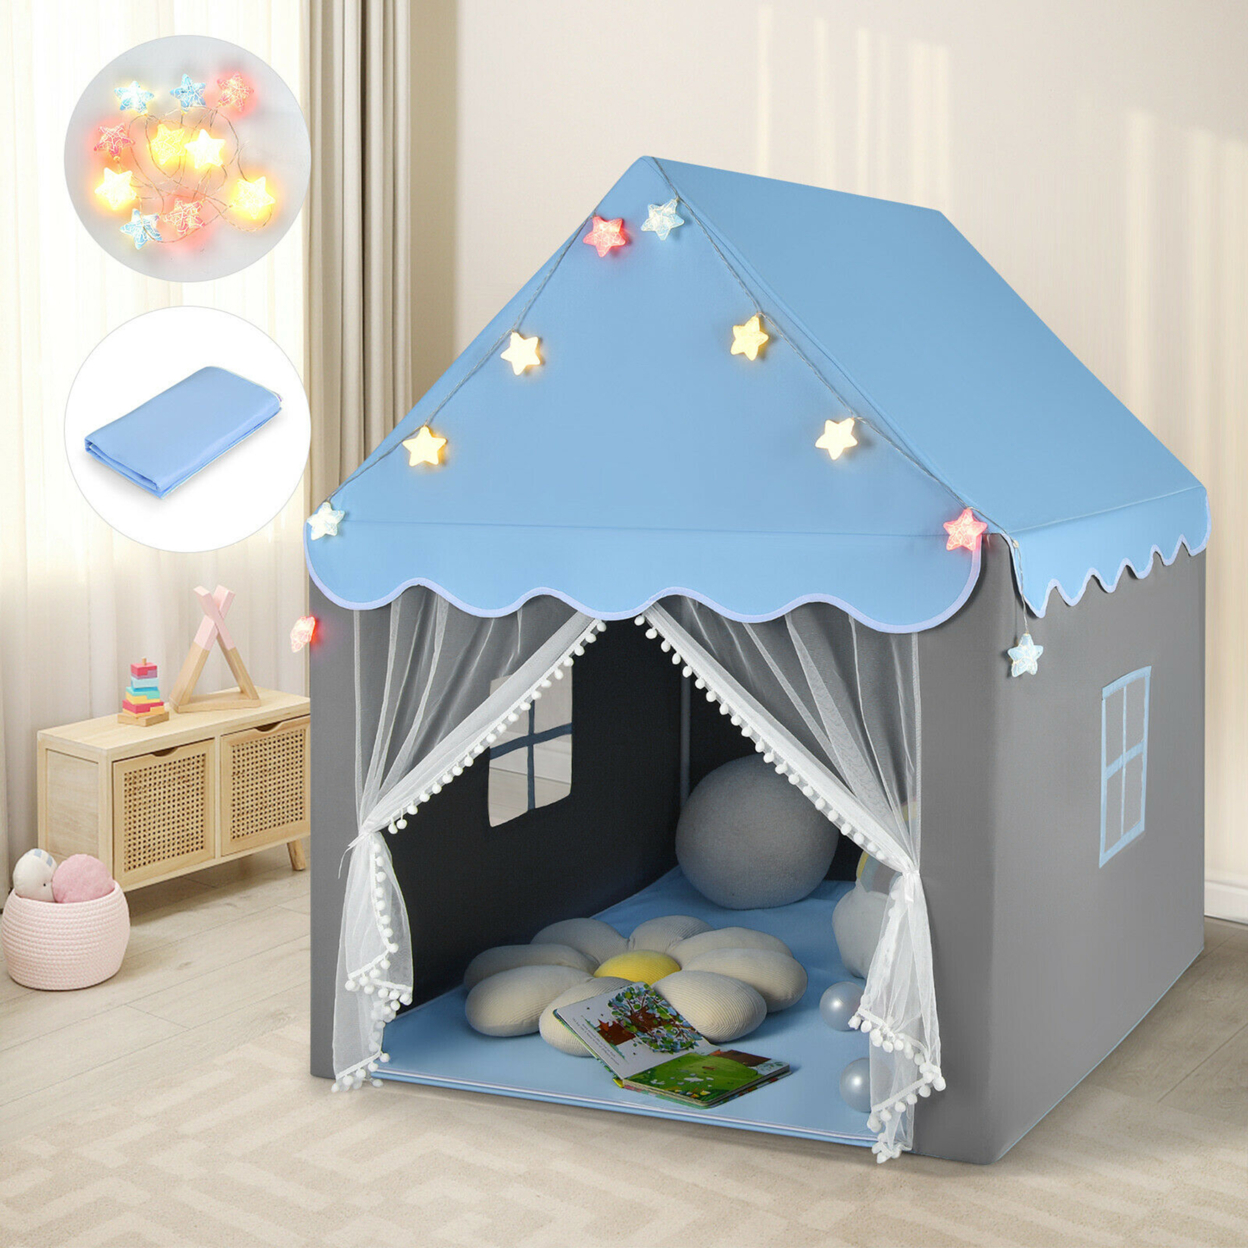 Kids Playhouse Tent Large Castle Fairy Tent Gift W/Star Lights Mat - Blue + Gray